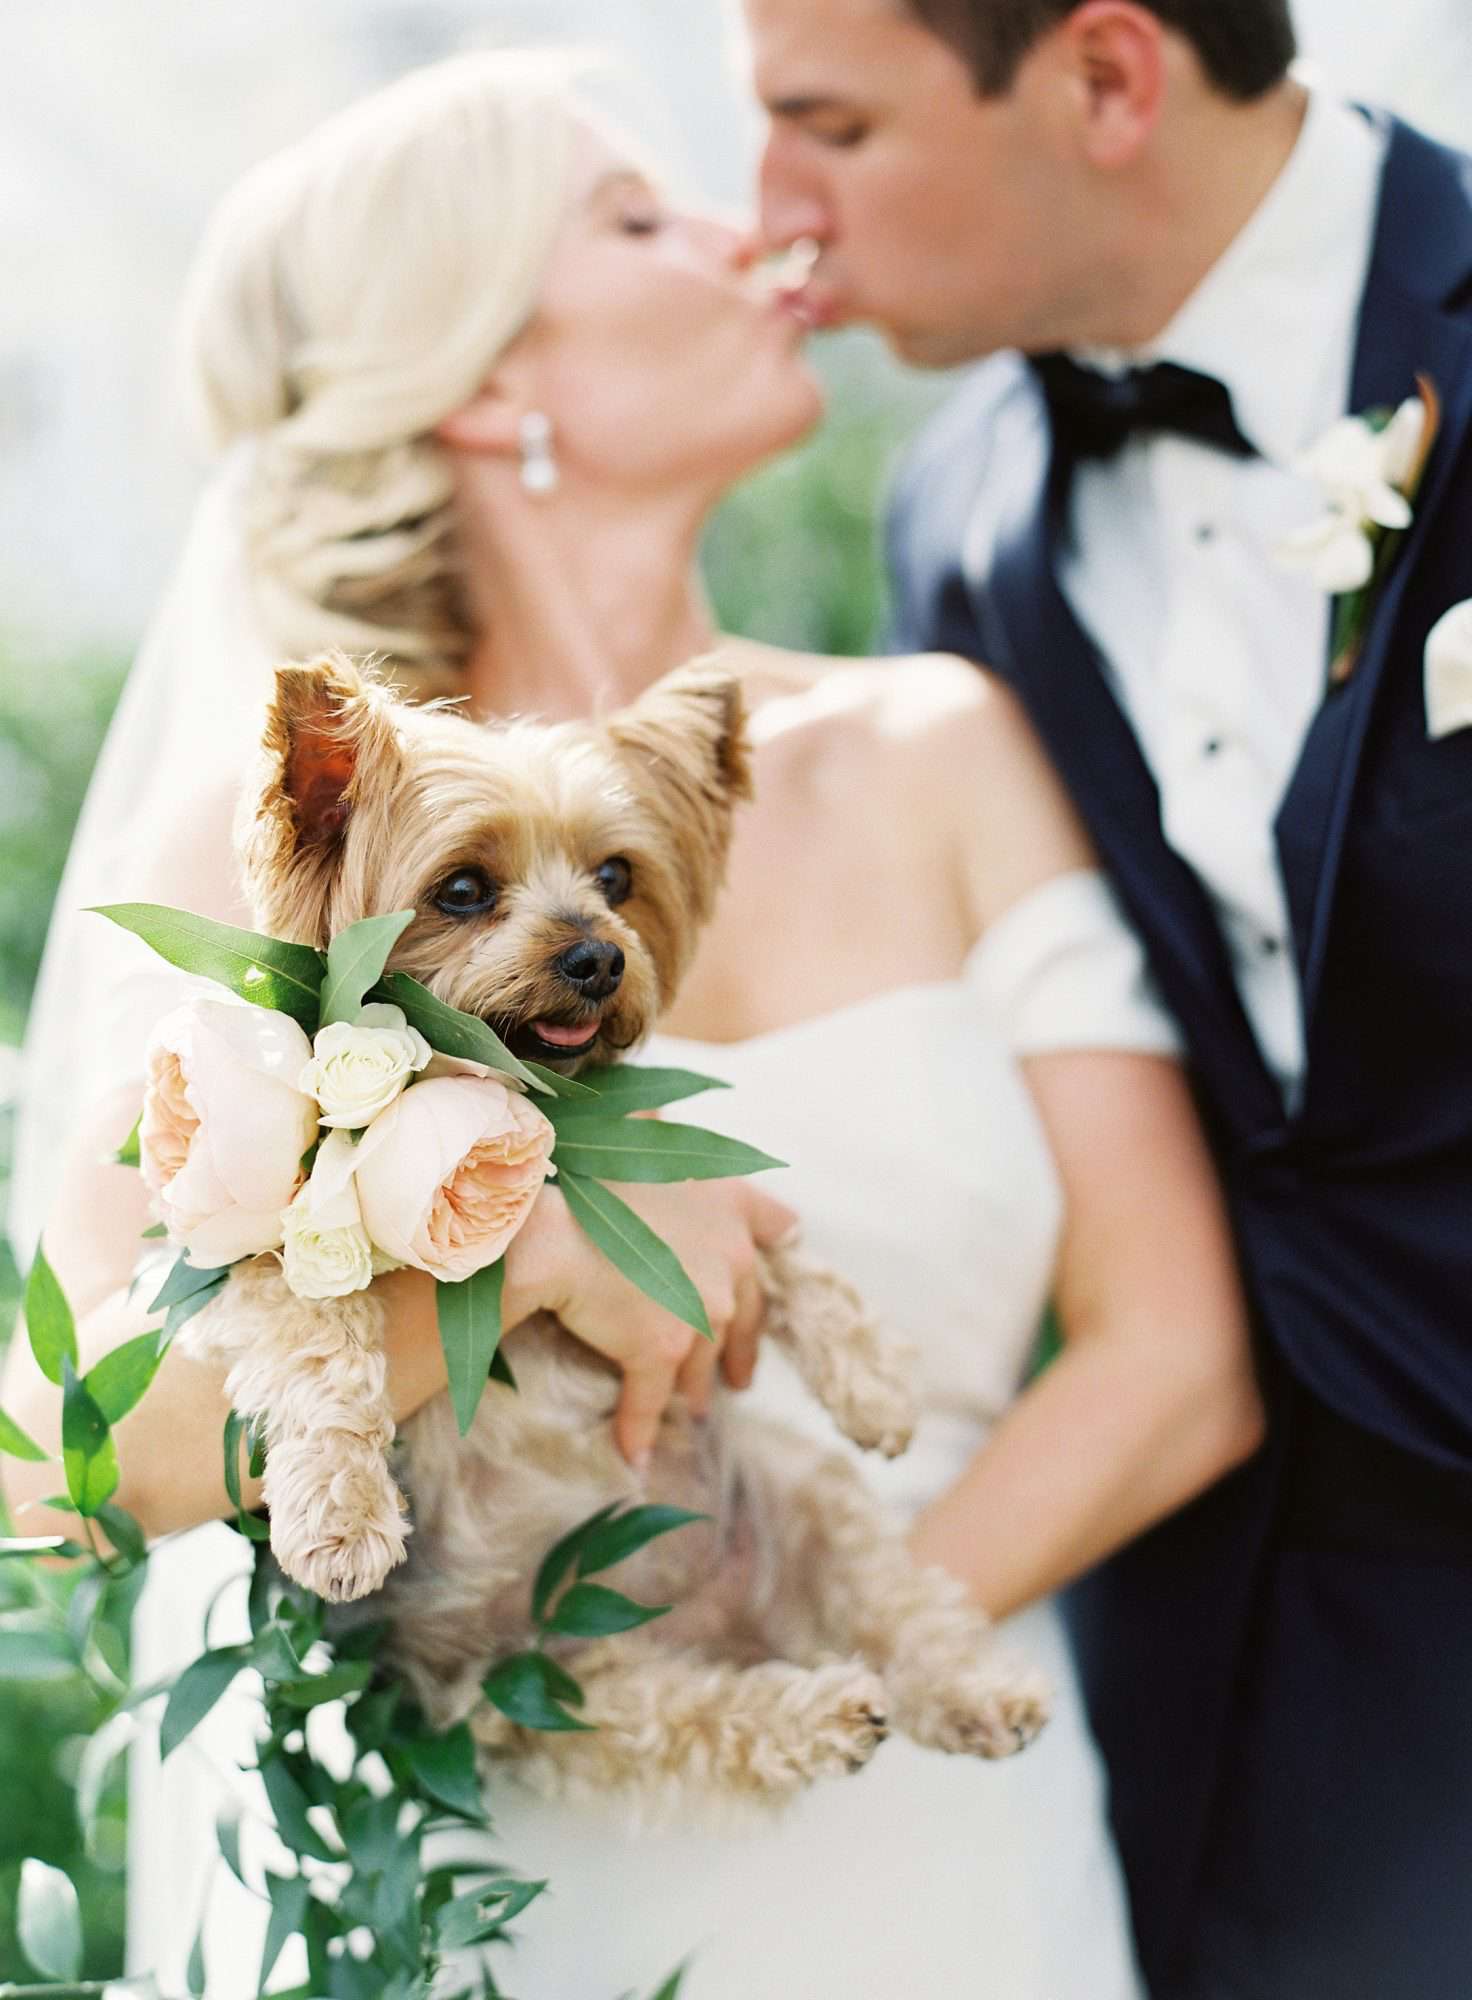 dog wedding bride groom kiss couple puppy bouquet